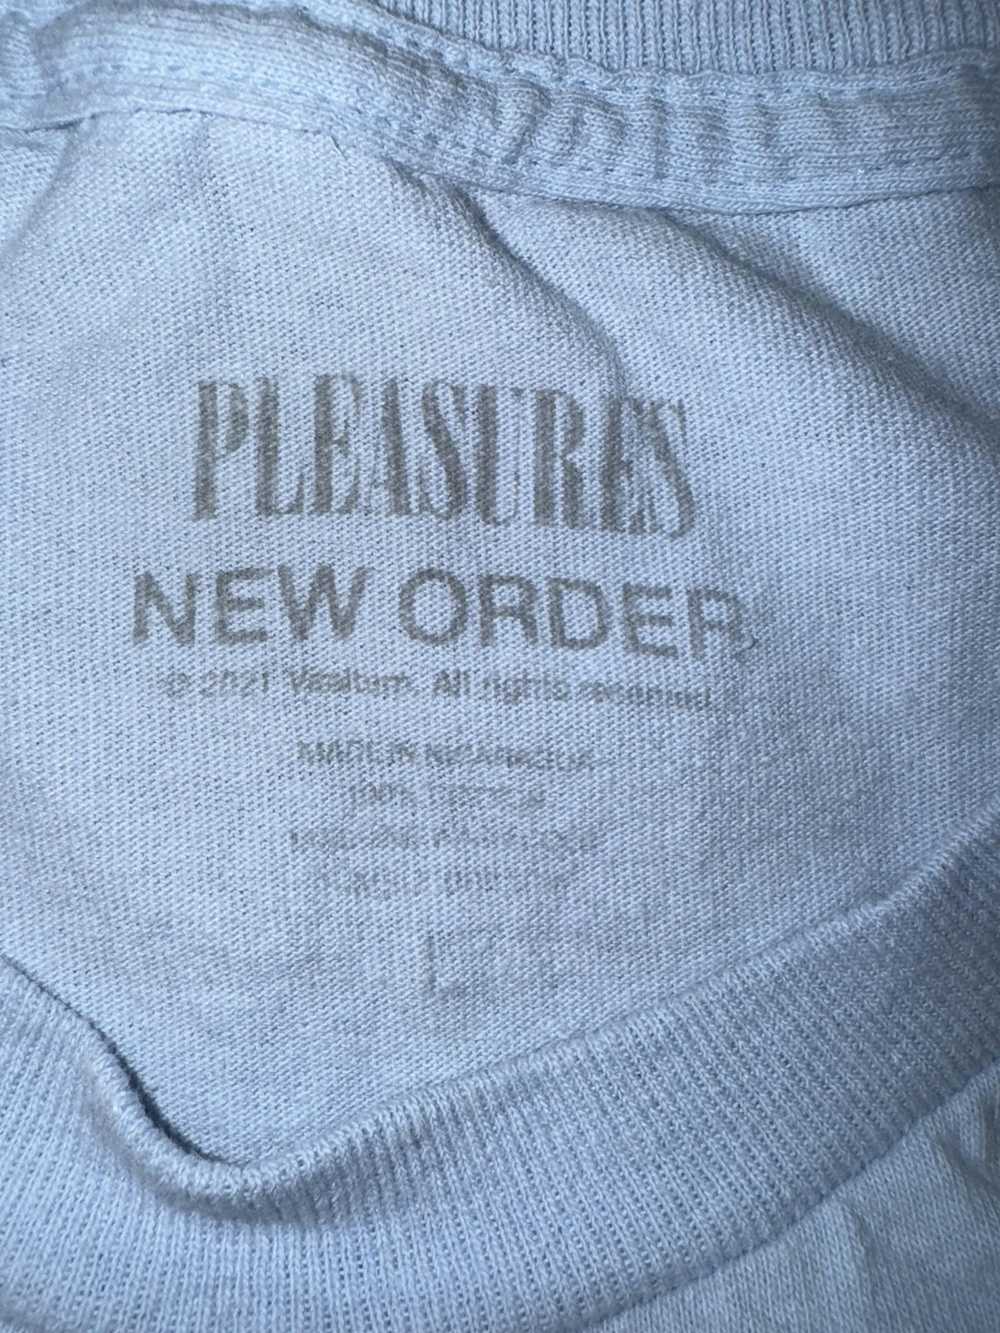 Pleasures Pleasures x New Order "Technique" Long … - image 3